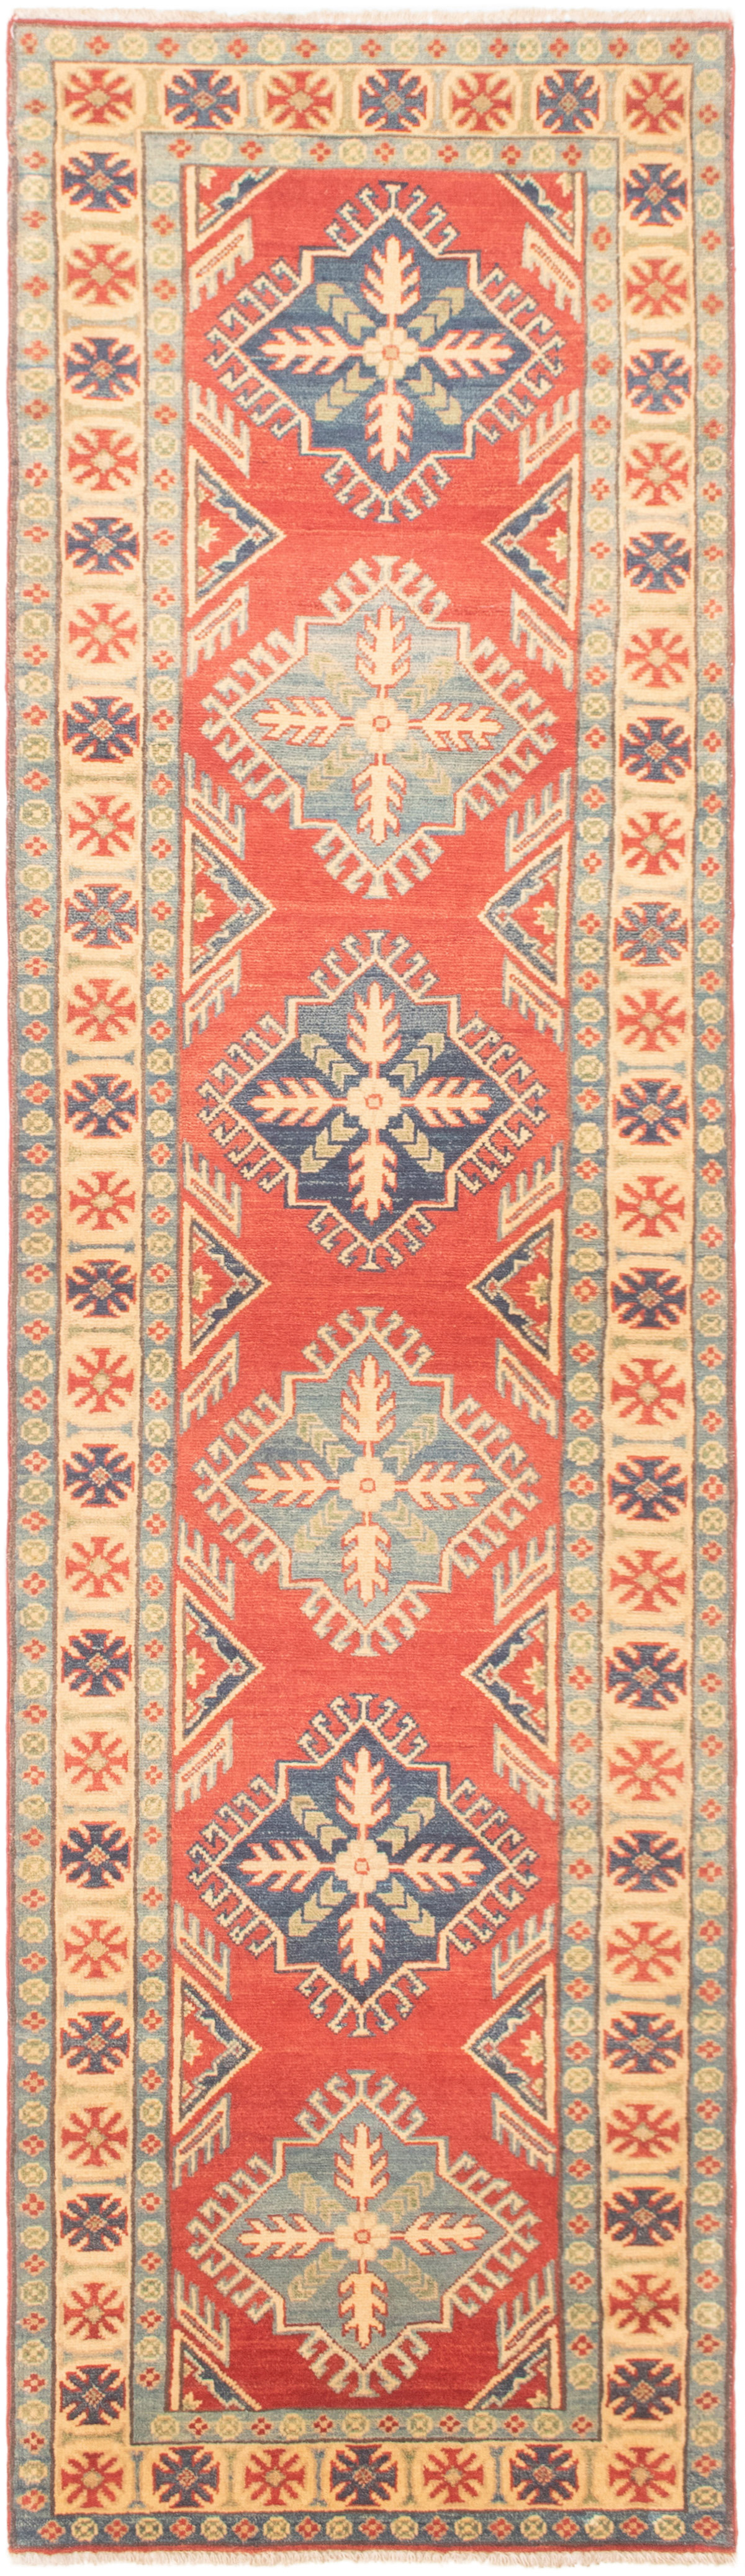 Hand-knotted Finest Gazni Dark Copper Wool Rug 2'7" x 10'3"  Size: 2'7" x 10'3"  